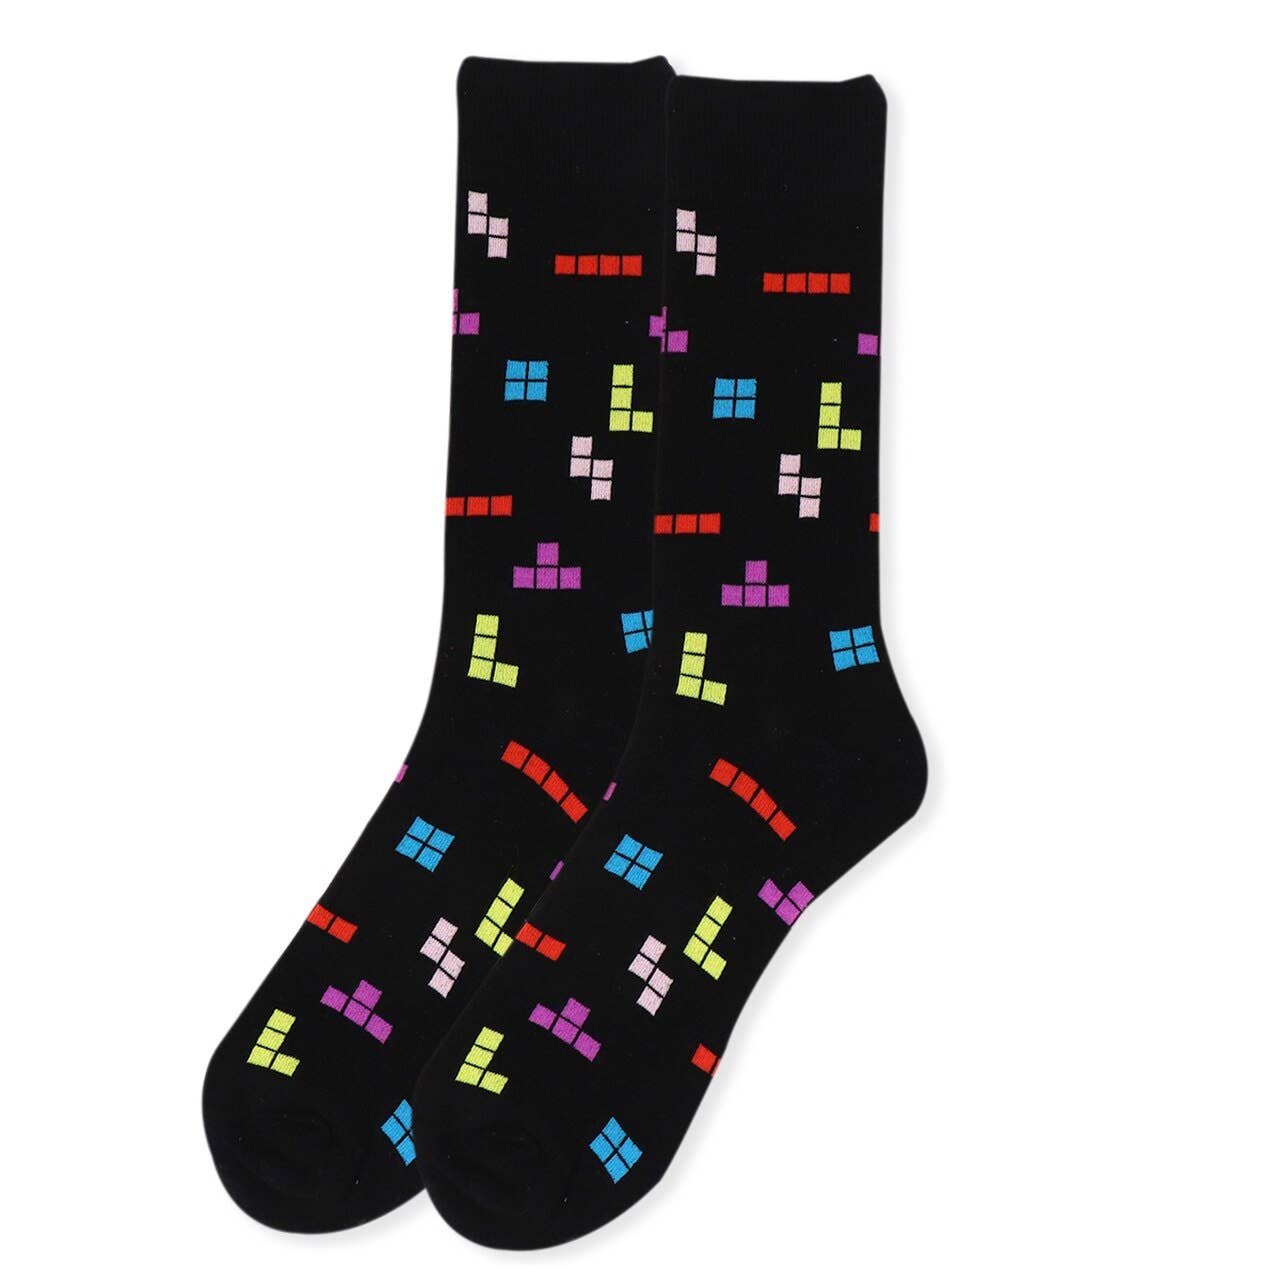 Parquet - Tetris Socks for Men